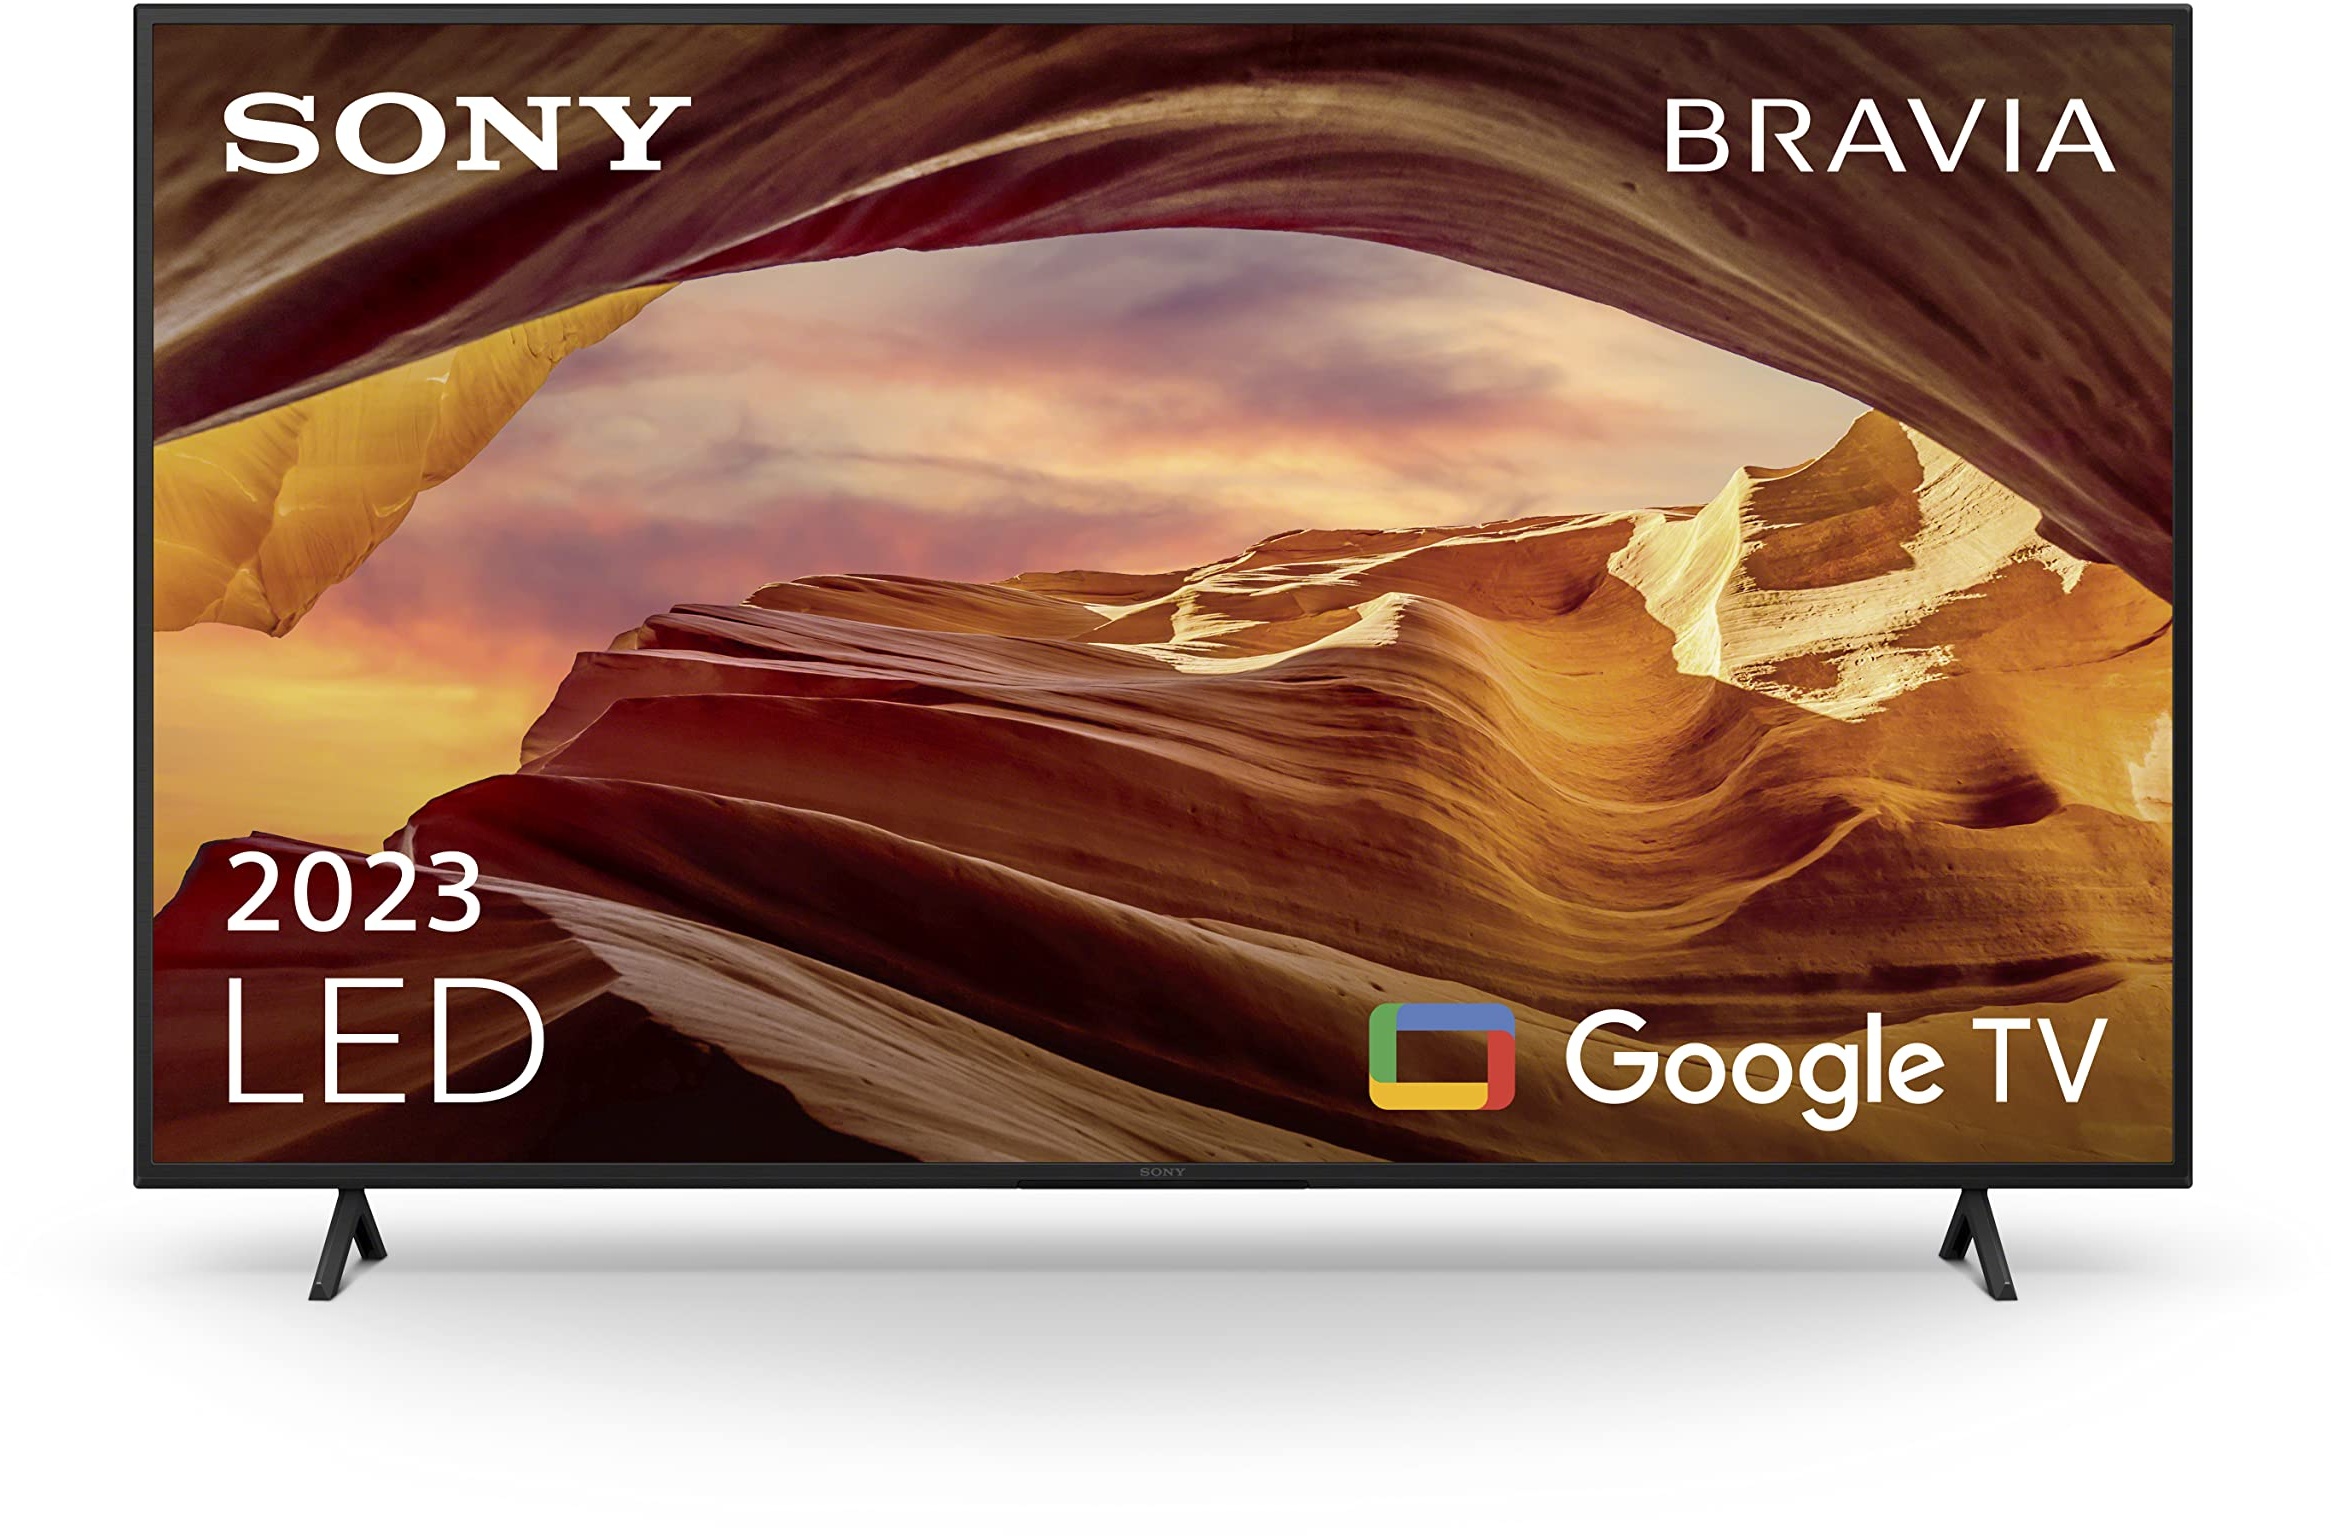 Sony BRAVIA, KD-55X75WL, 55 Zoll Fernseher, LED, 4K HDR, Google TV, Smart TV, Works with Alexa, BRAVIA CORE, HDMI 2.1, Gaming-Menü mit ALLM